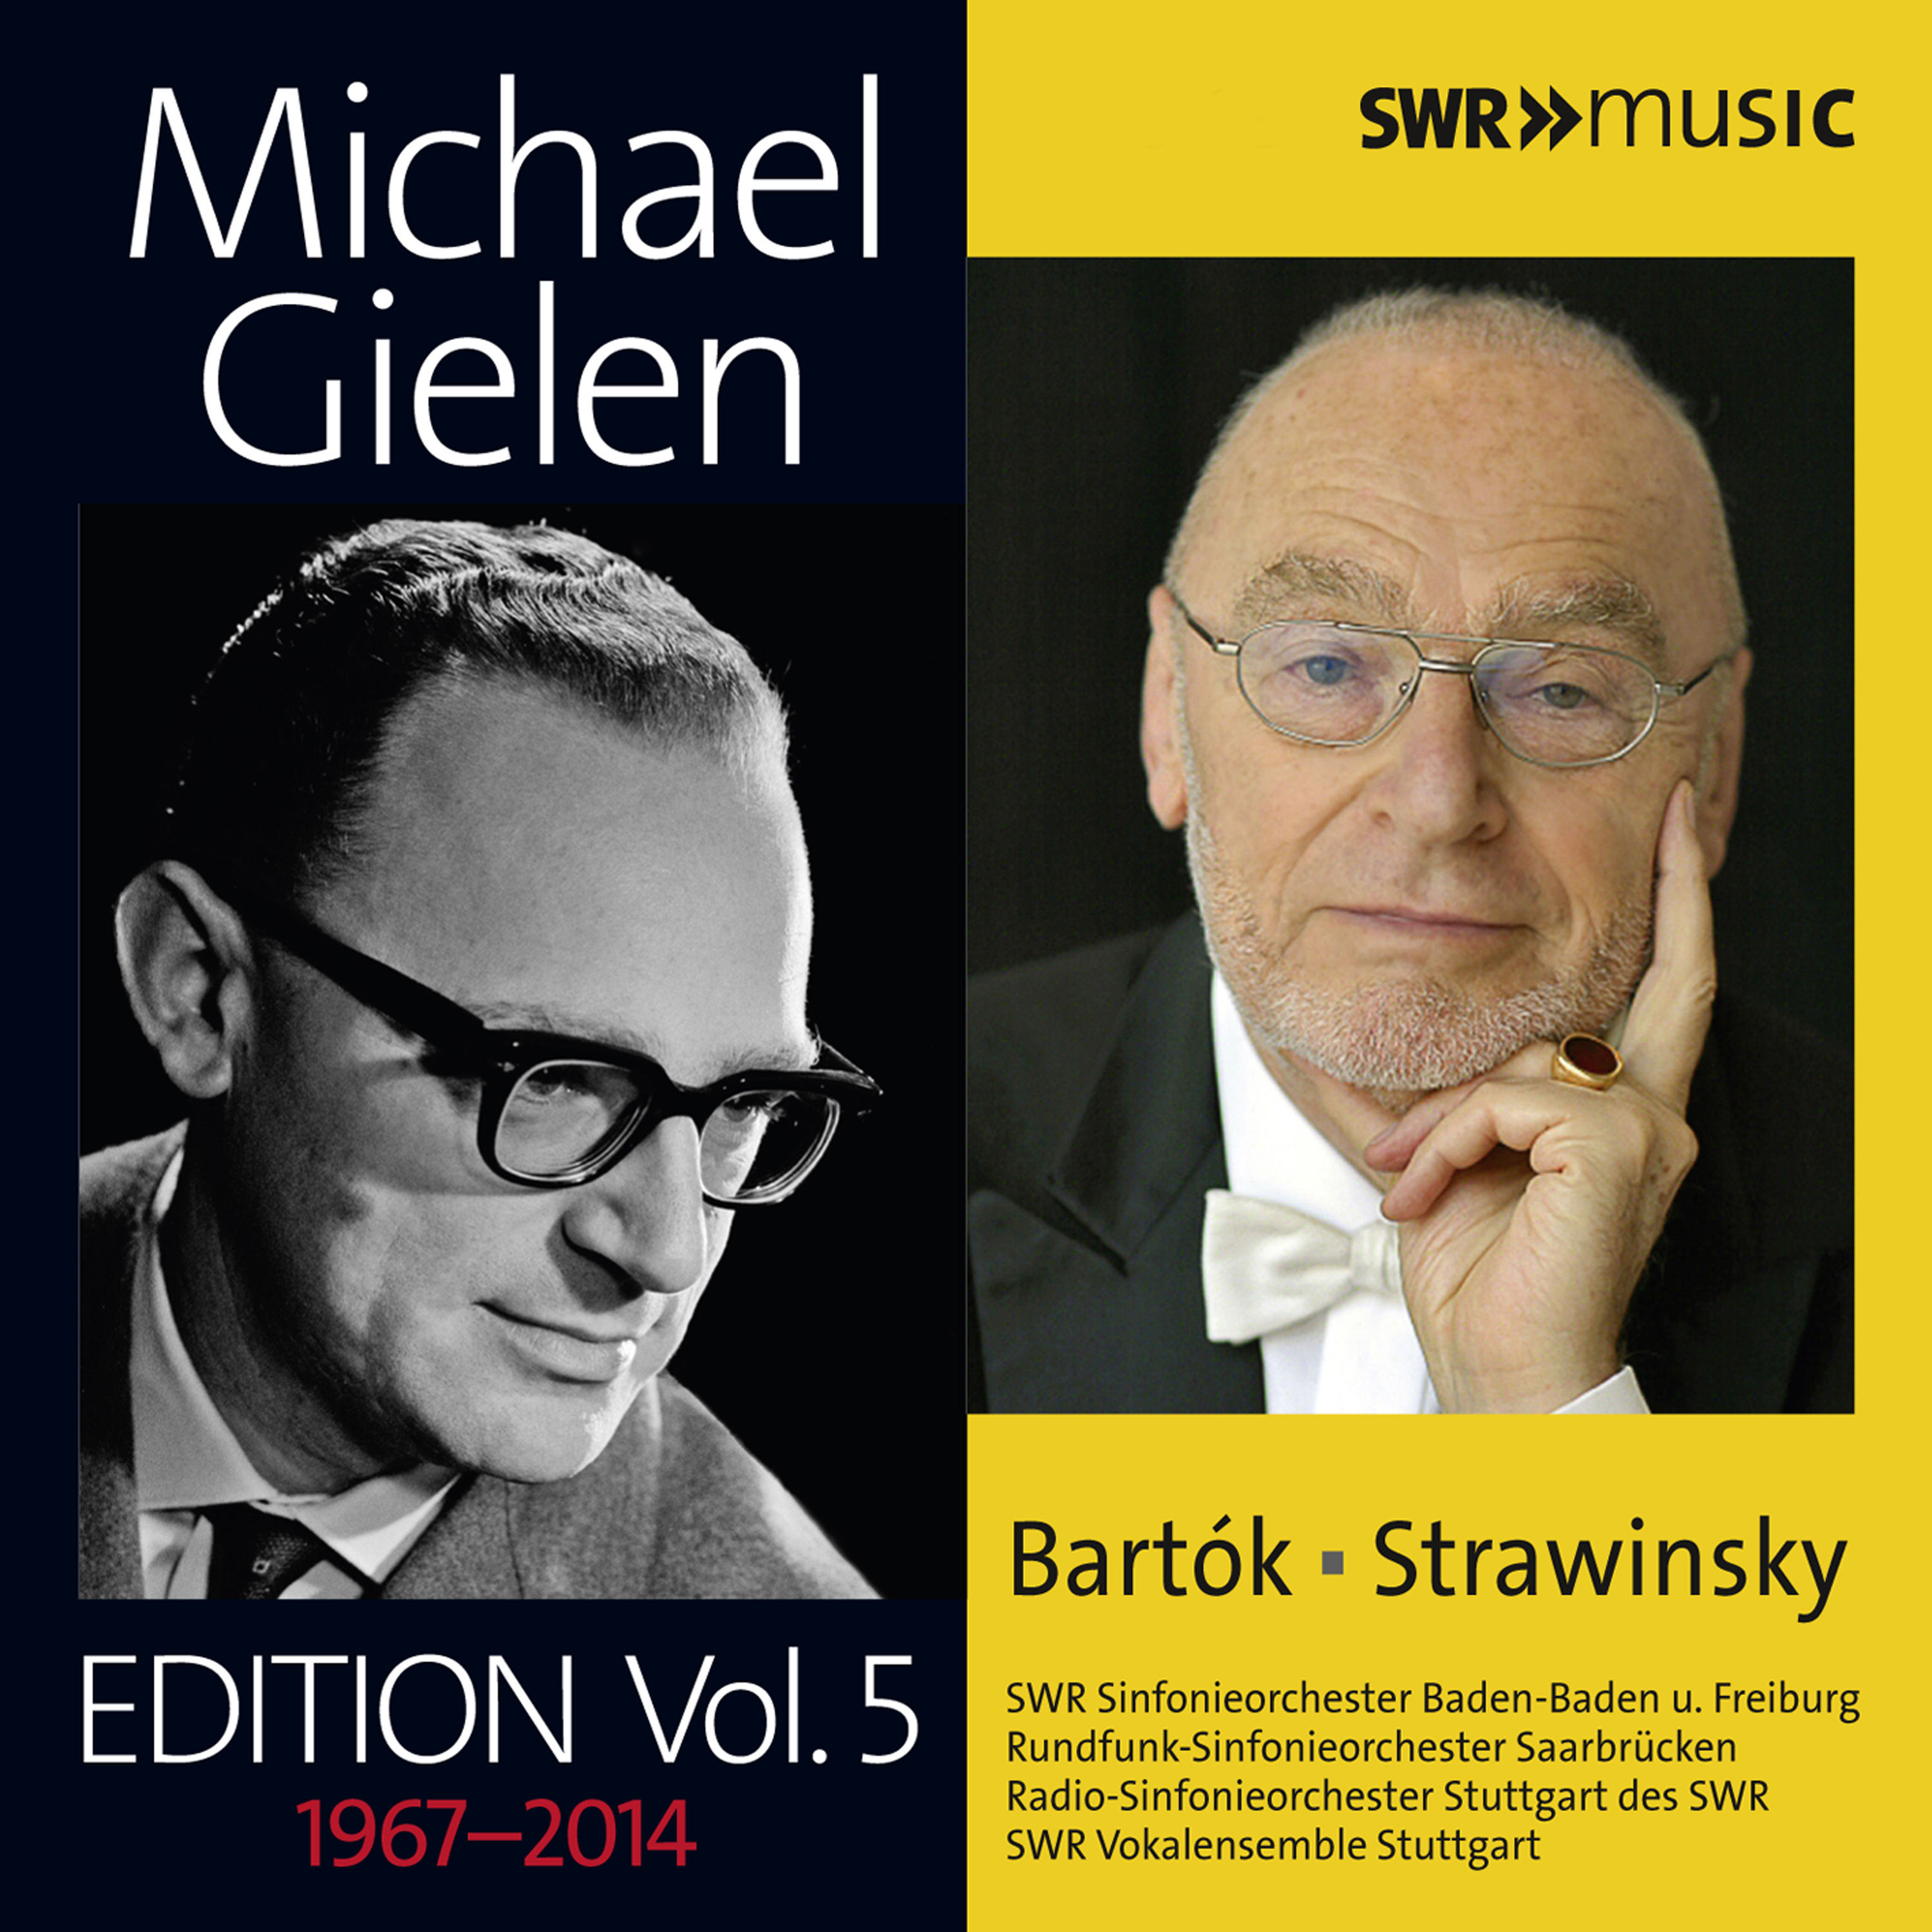 SWR Sinfonieorchester - Michael Gielen Edition Vol. 5 cd04 Bartok Strawinsky